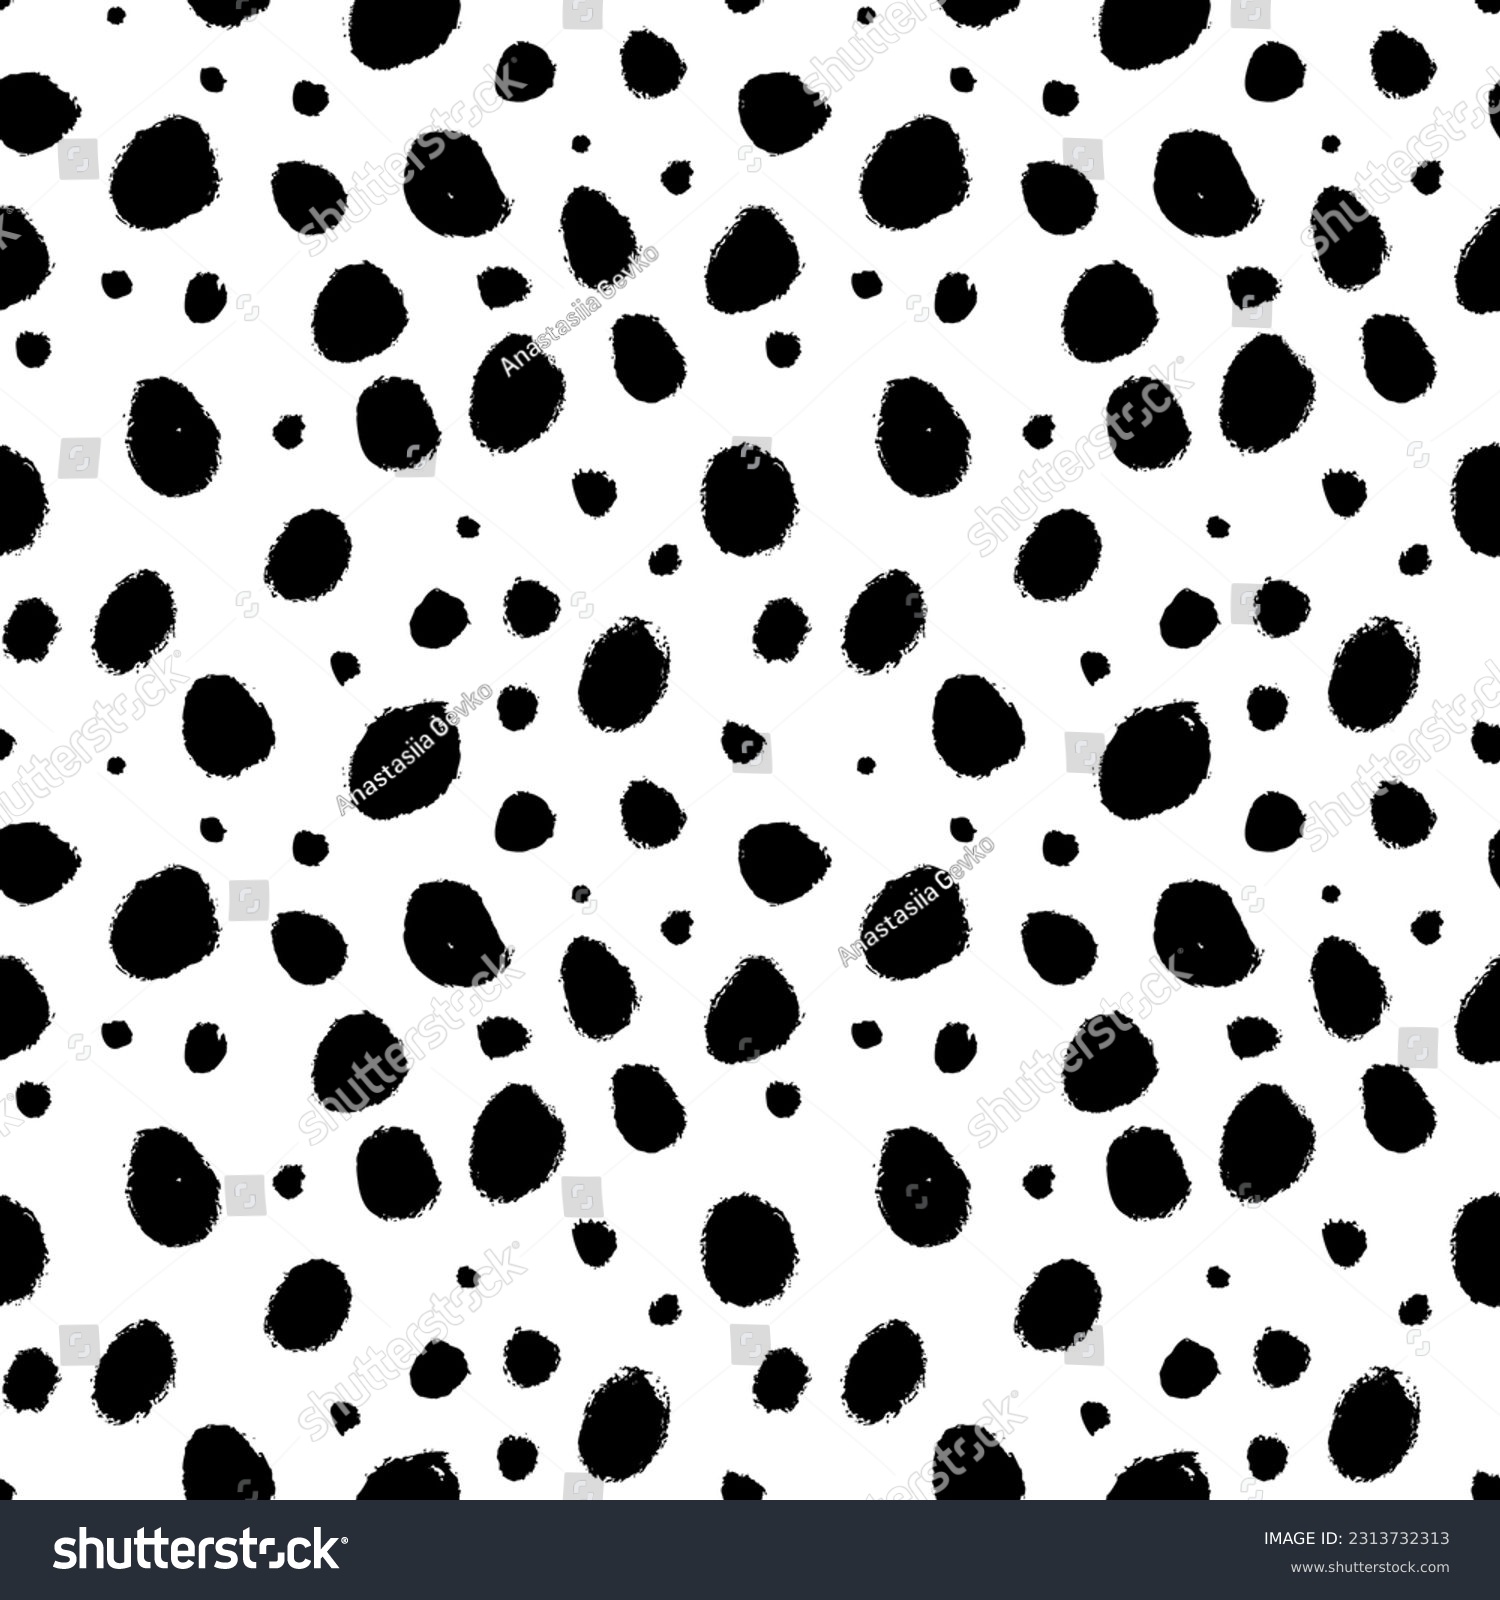 SVG of Grunge spots hand drawn vector seamless pattern. Blobs and blotches background. Irregular organic dots and blots ornament. Cheetah spots black print. Seamless pattern with scattered round dots. svg